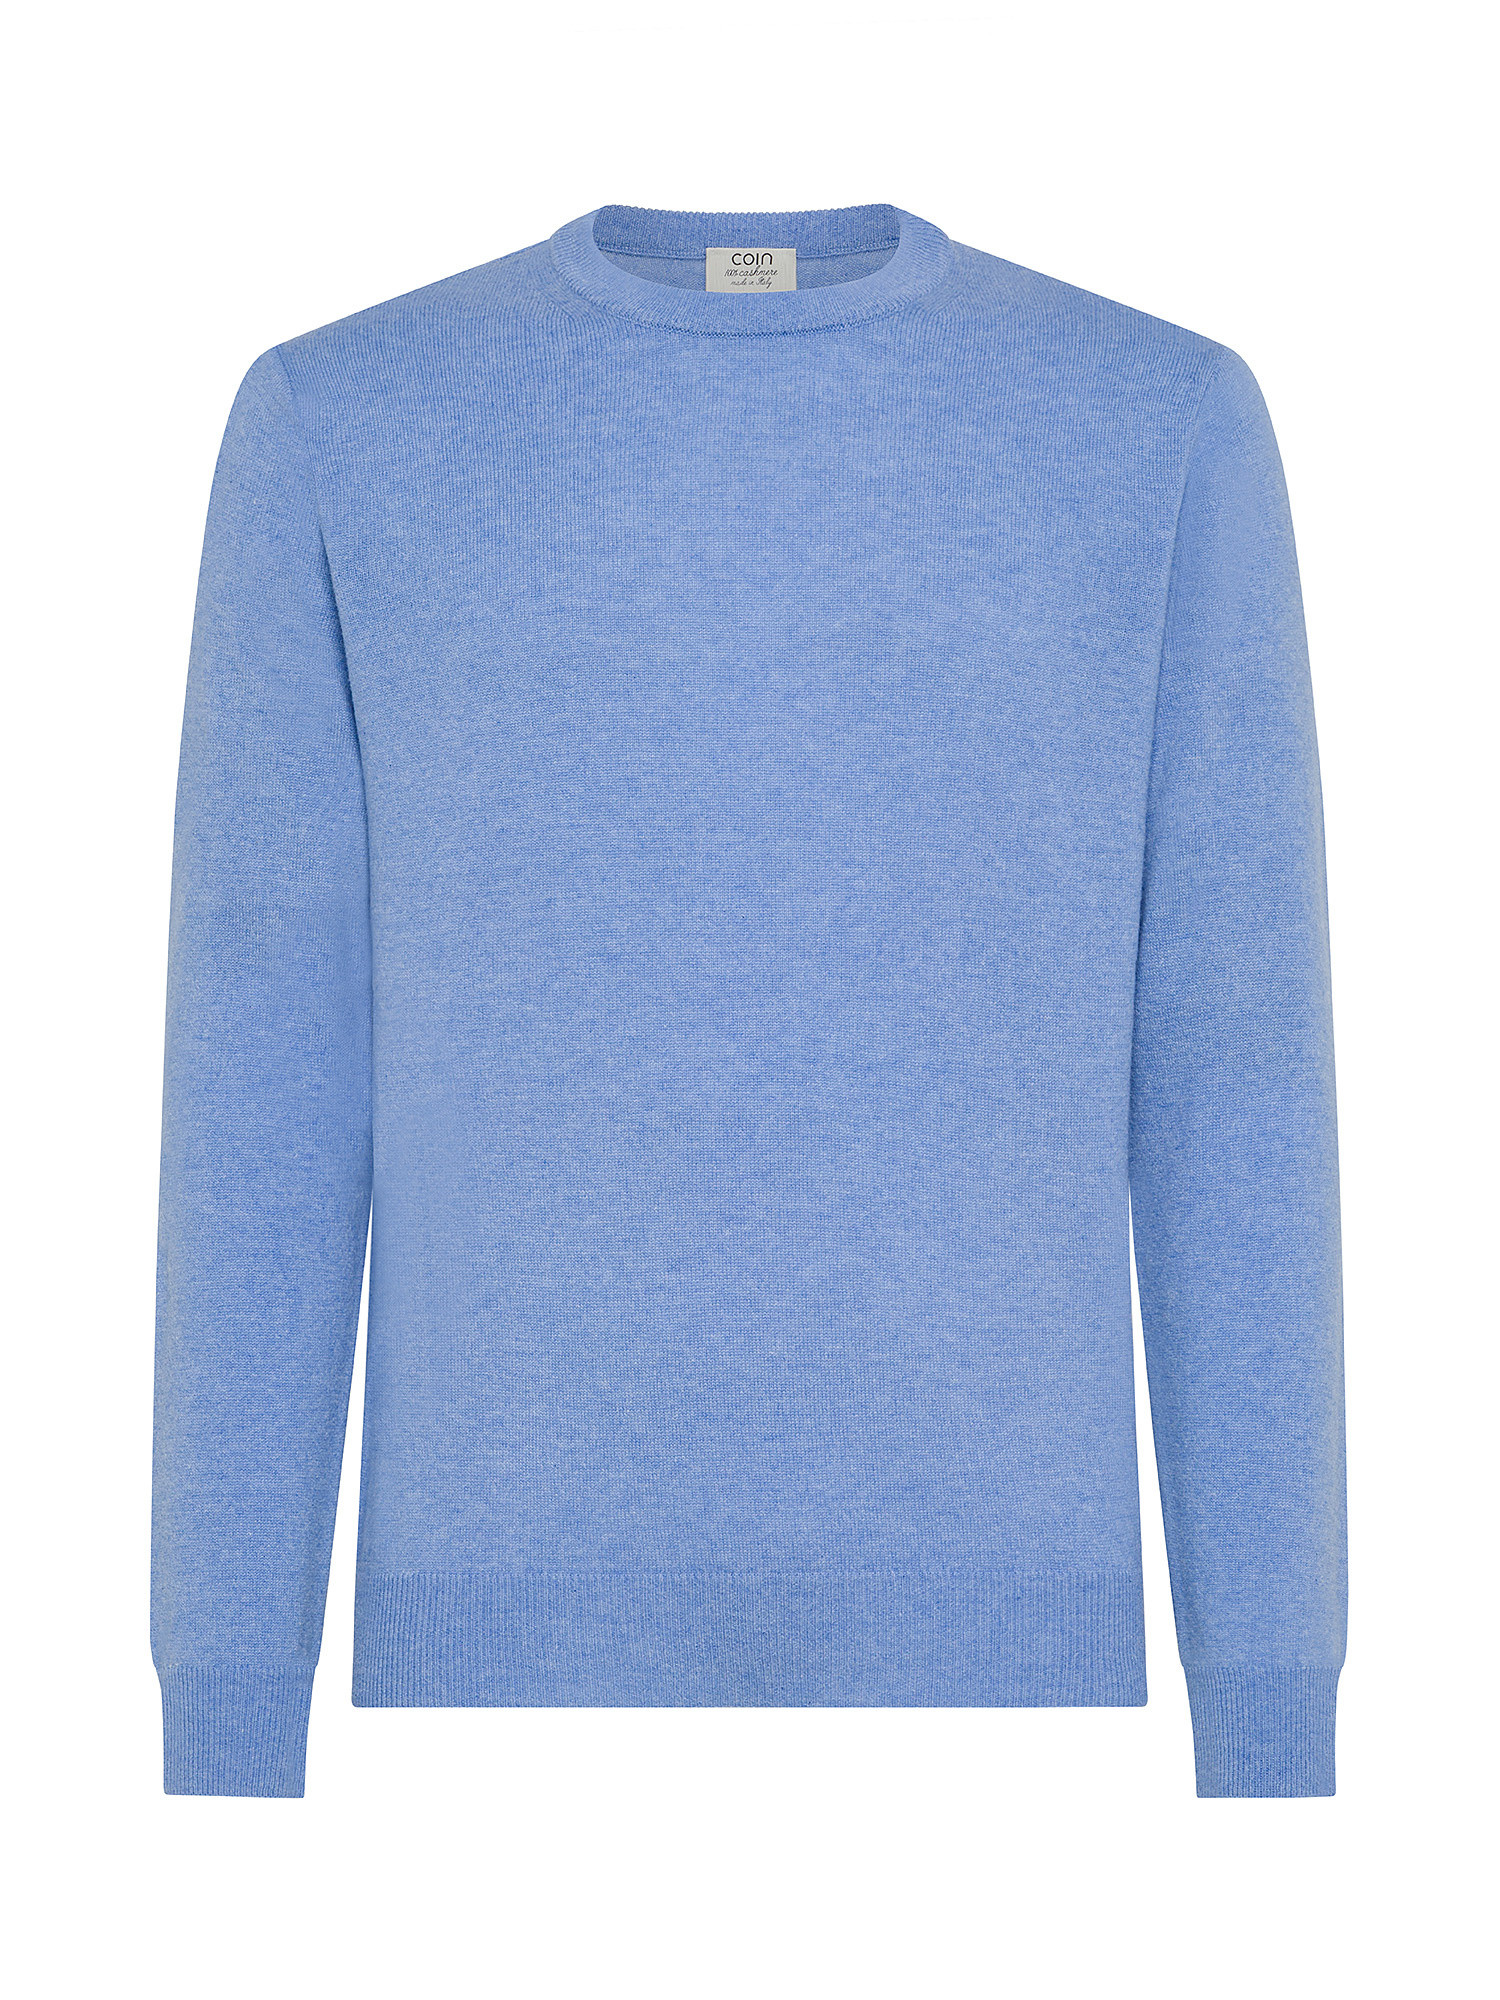 Coin Cashmere - Crewneck sweater in pure cashmere, Blue Celeste, large image number 0